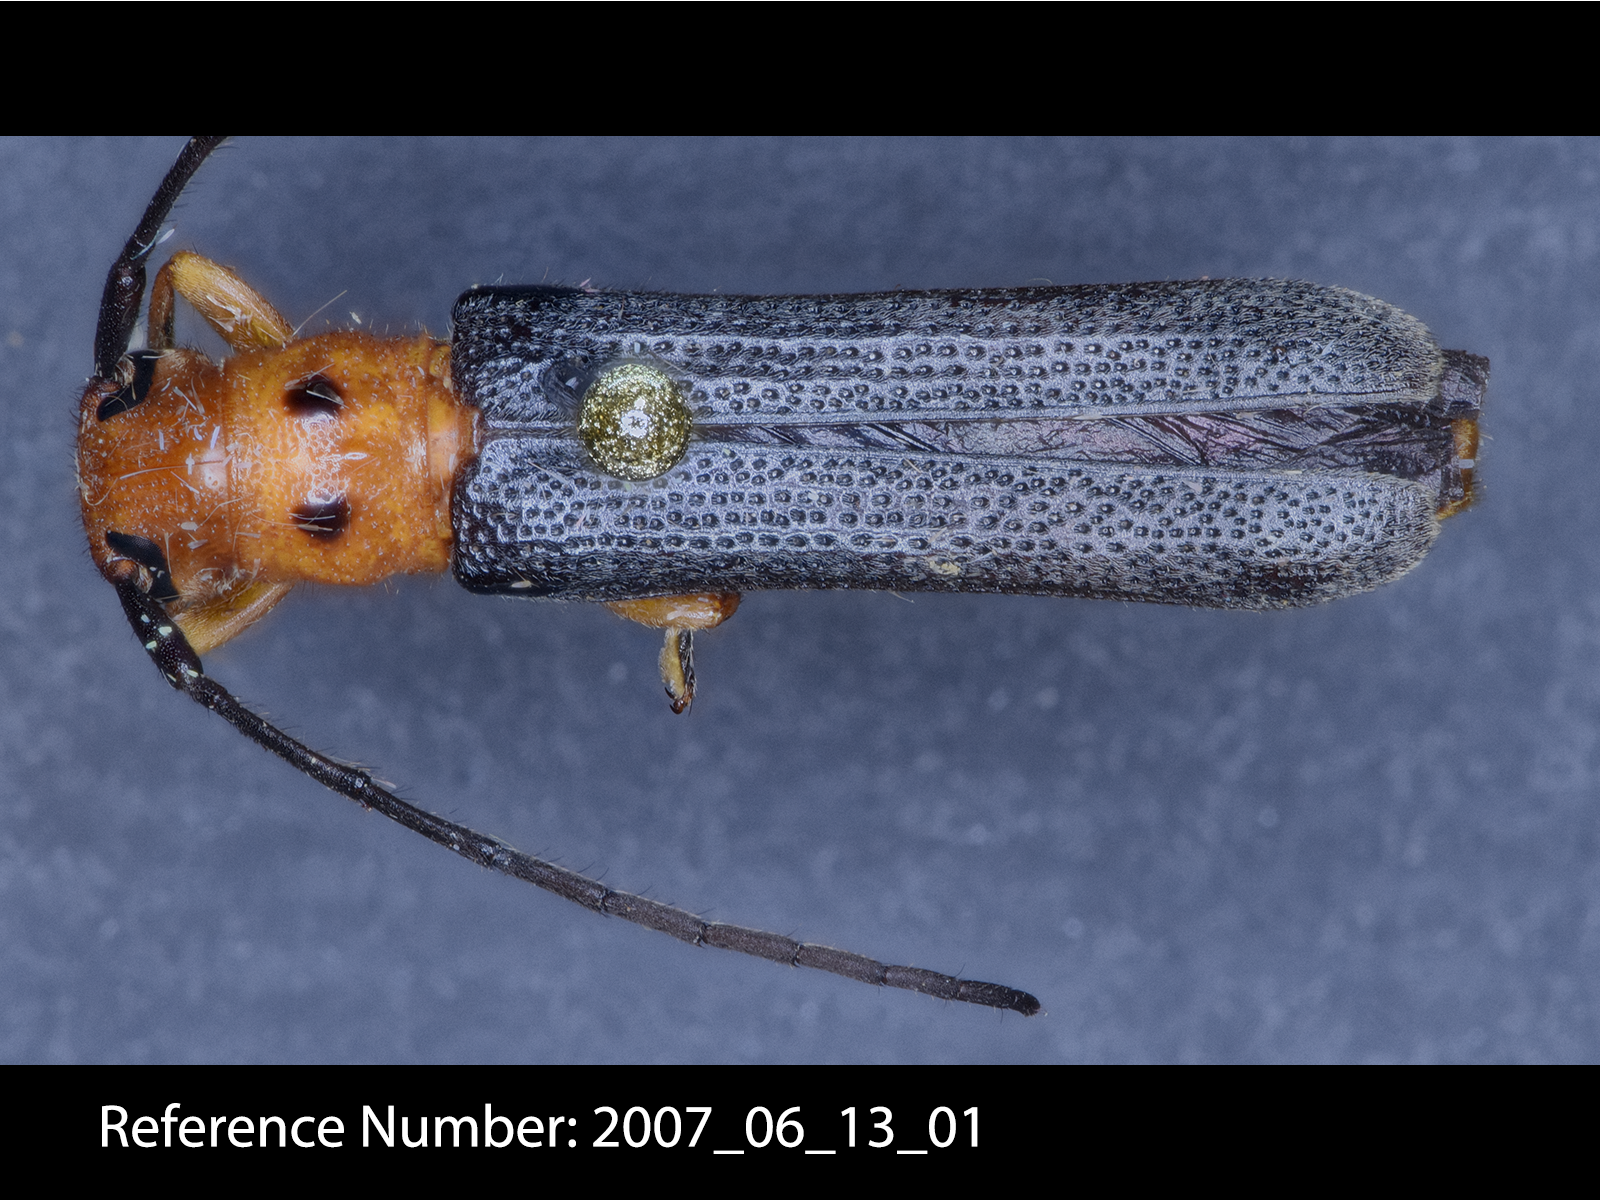 Oberea ocellata beetle dorsal view